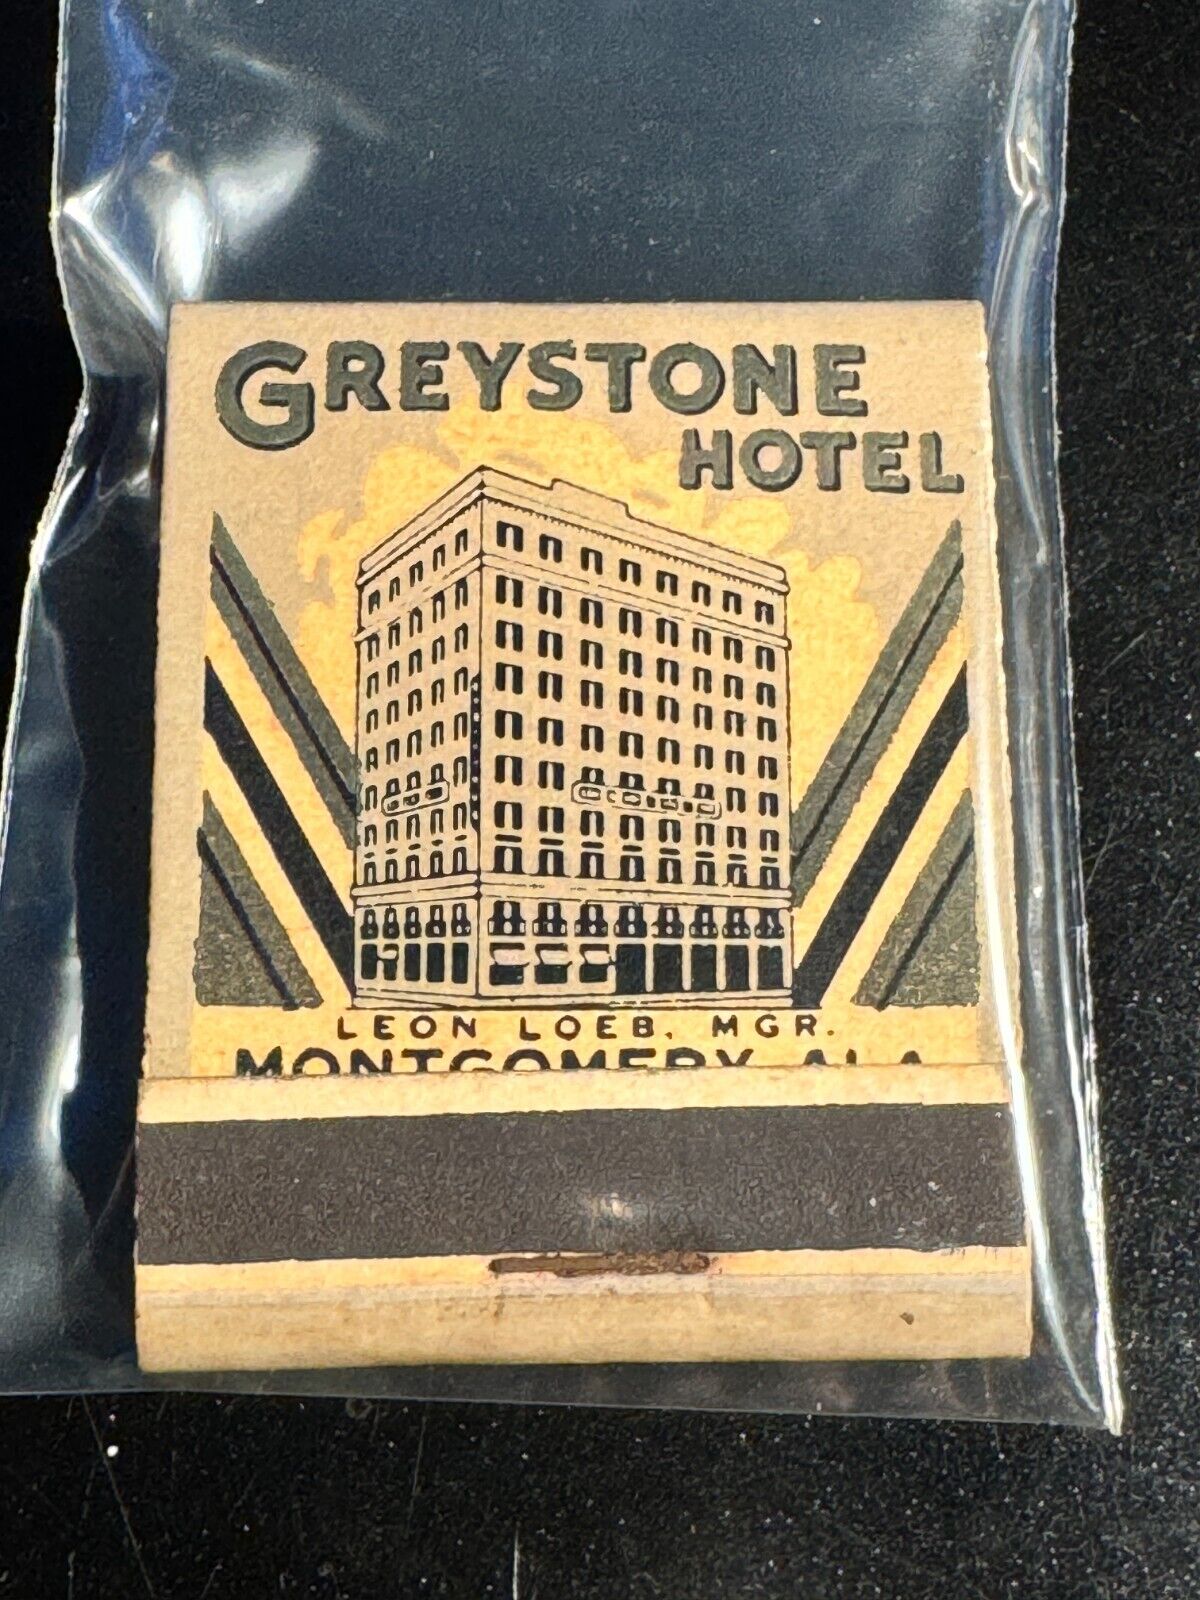 MATCHBOOK - 1930S - GREYSTONE HOTEL - MONTGOMERY, AL - UNSTRUCK